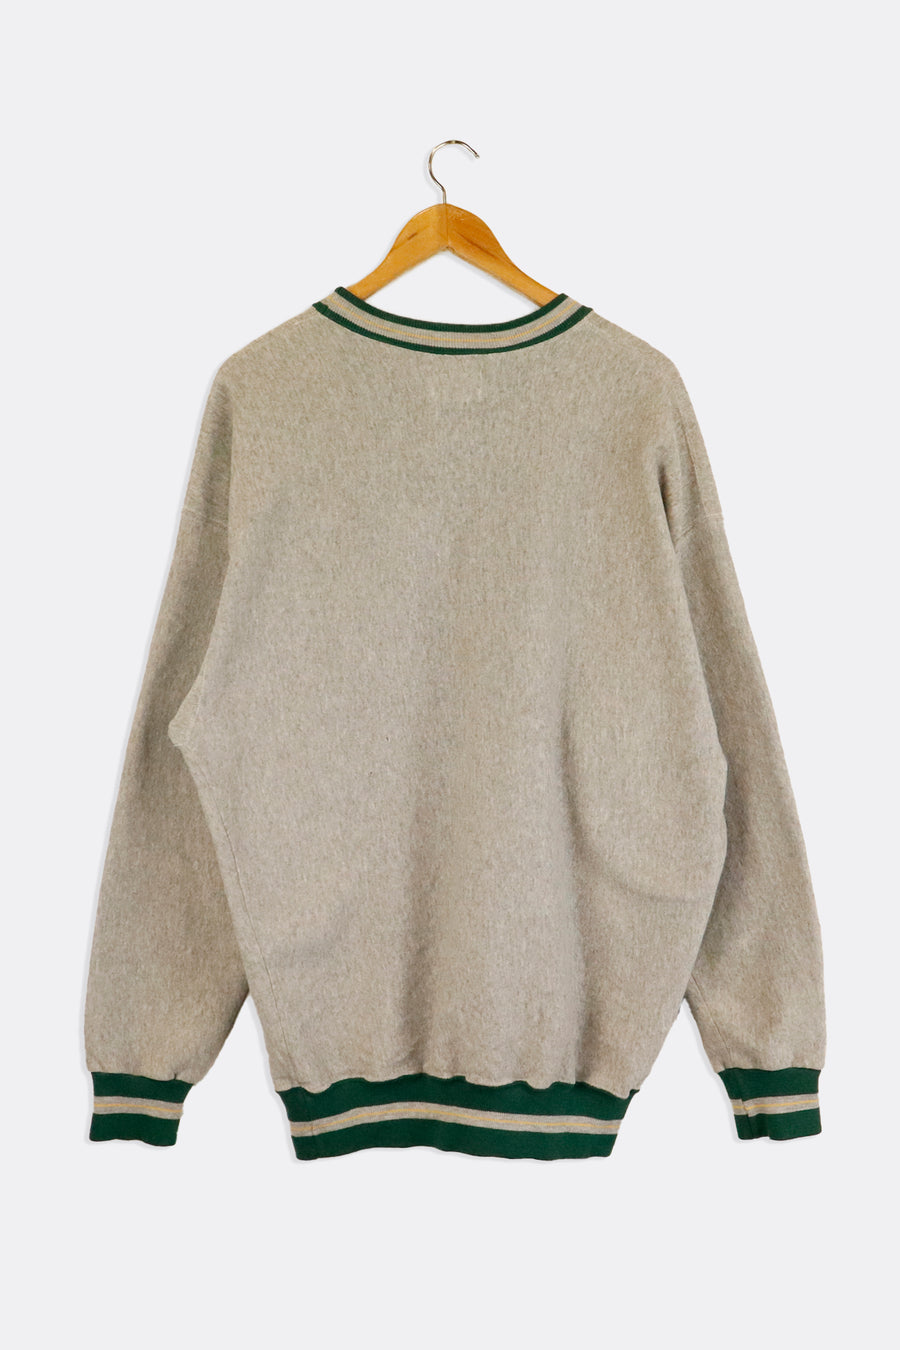 Vintage Green Bay Packers Letters Across Chest Sweatshirt Sz L